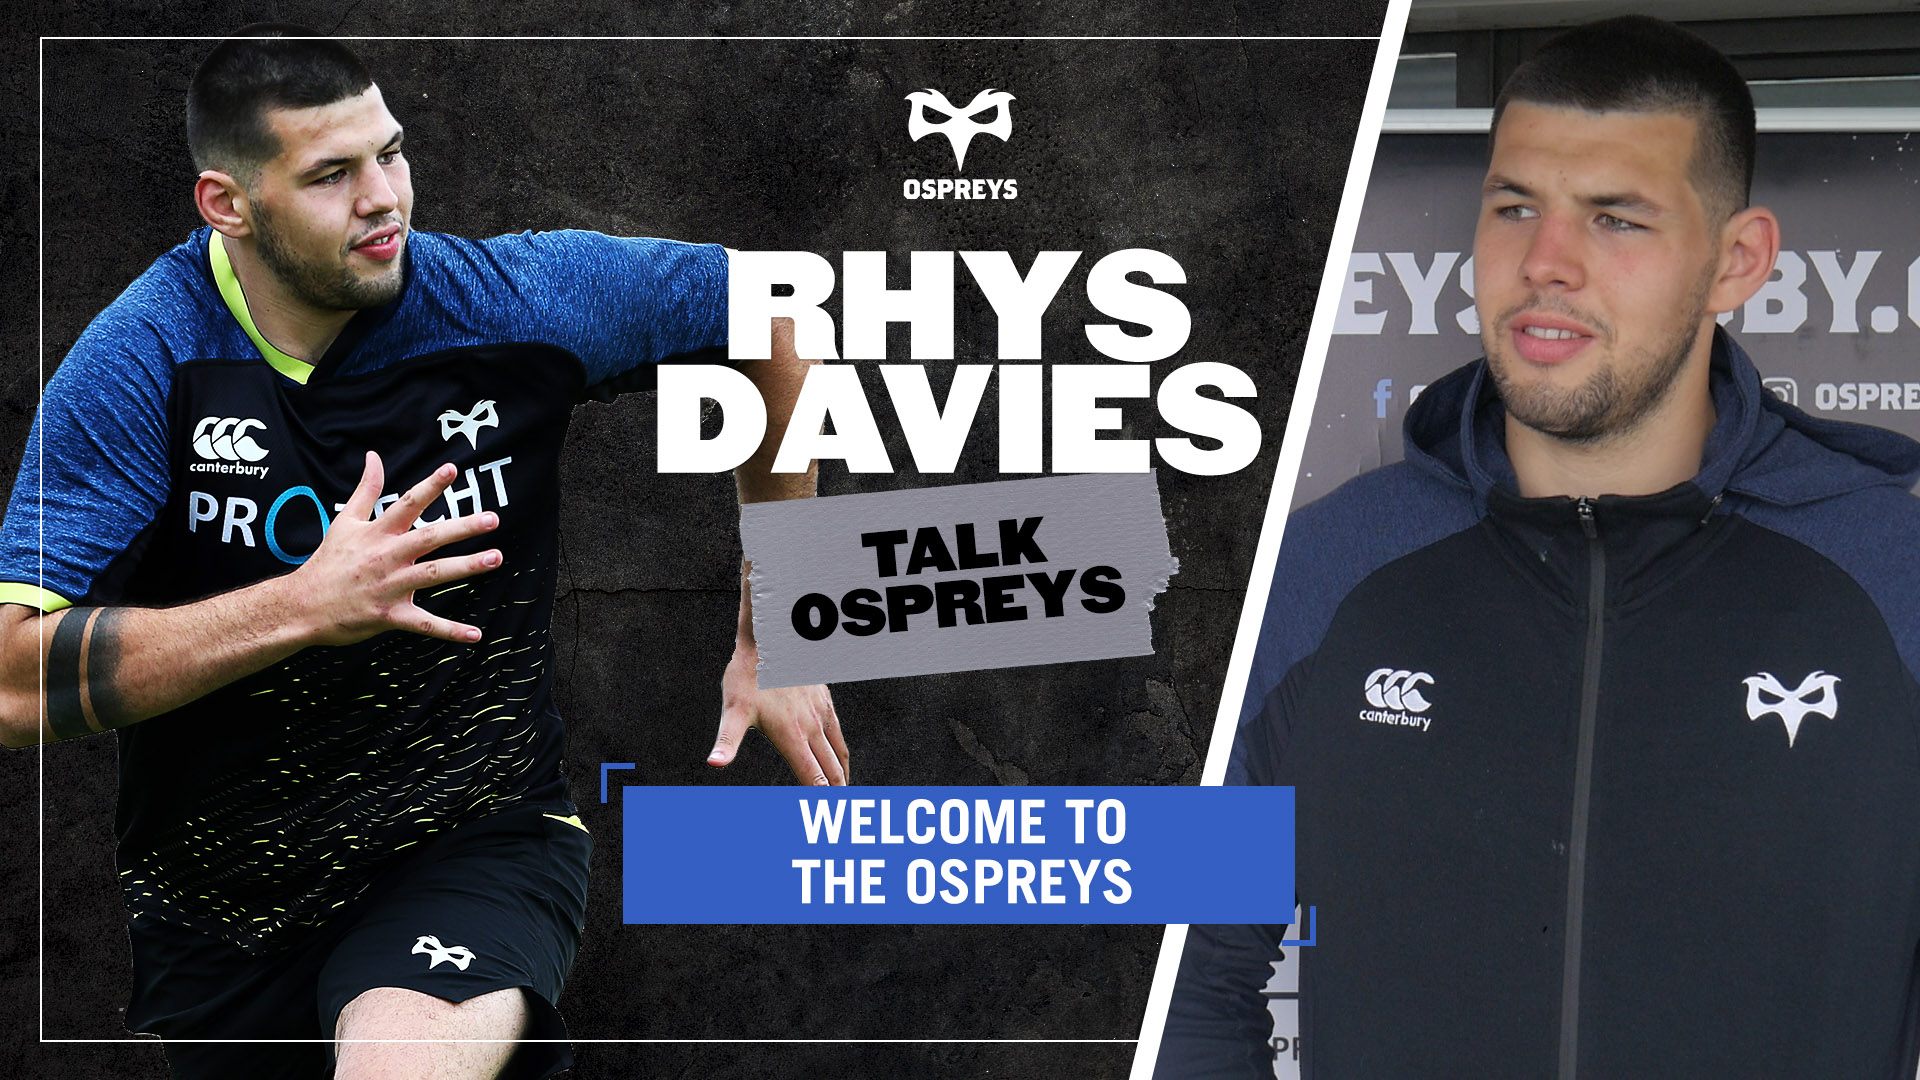 TALK OSpreys Rhys Davies